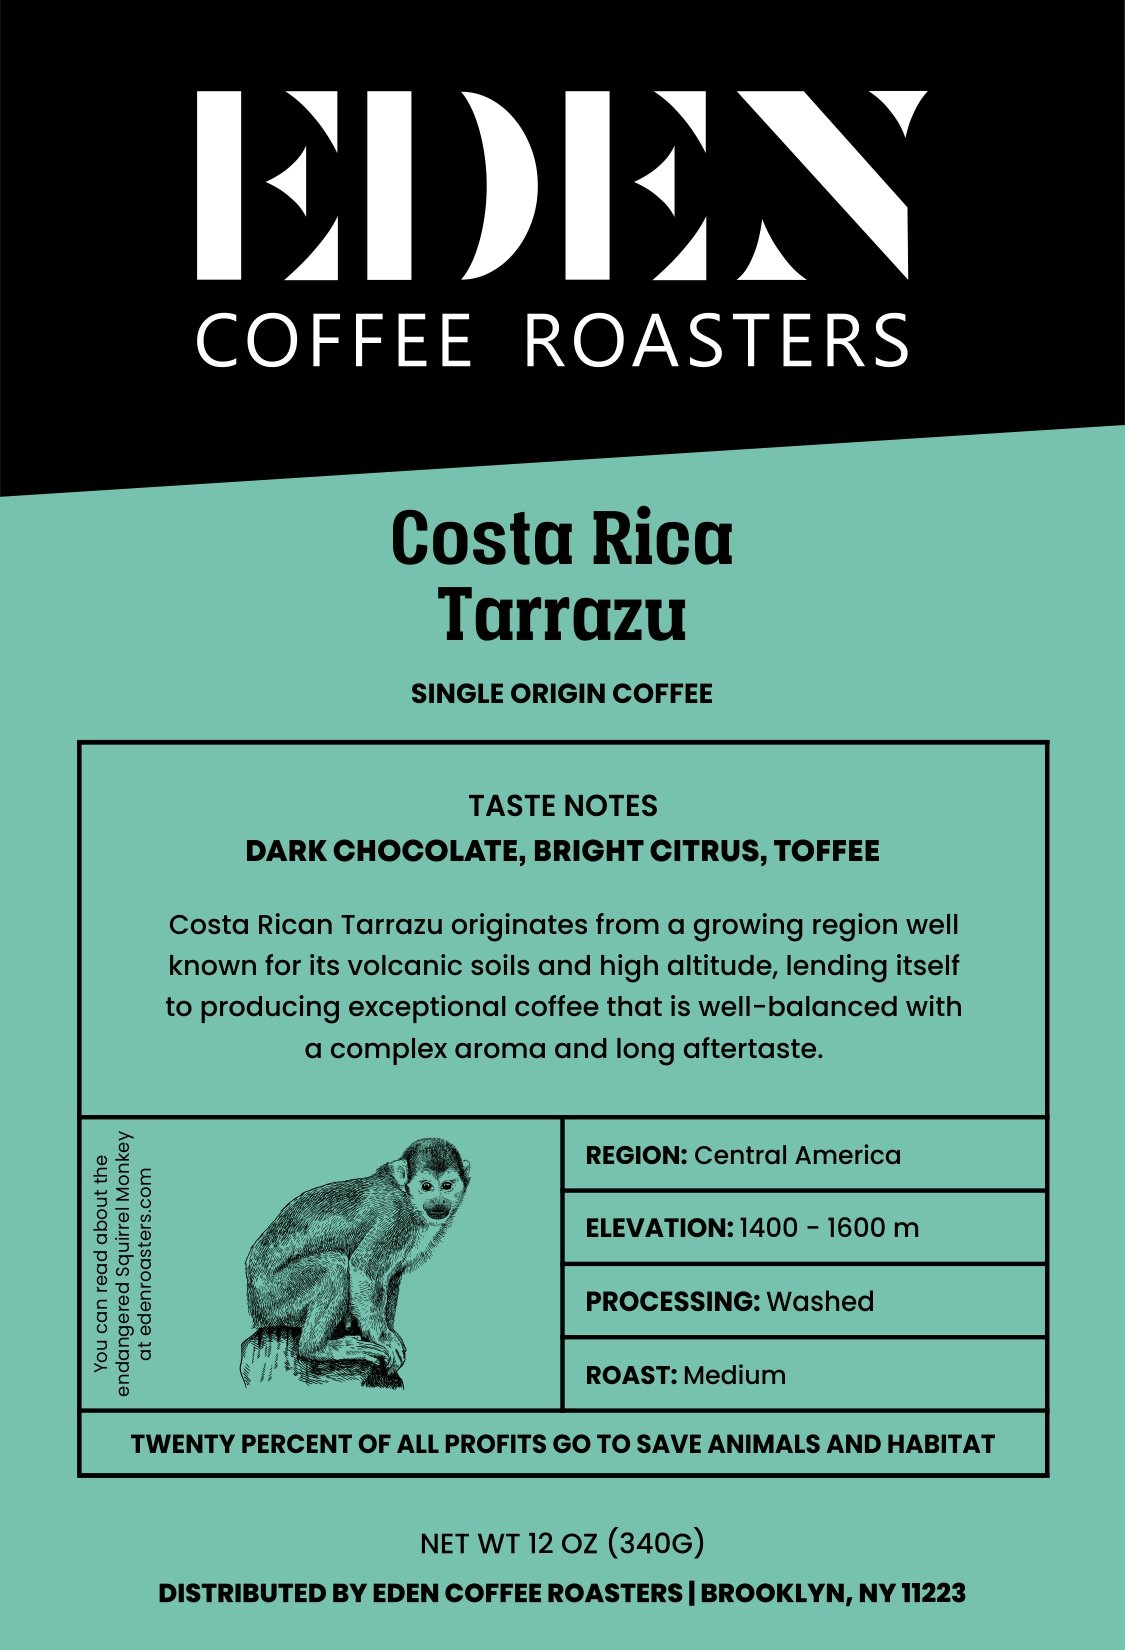 COSTA RICA, TARRAZU - Eden Coffee Roasters